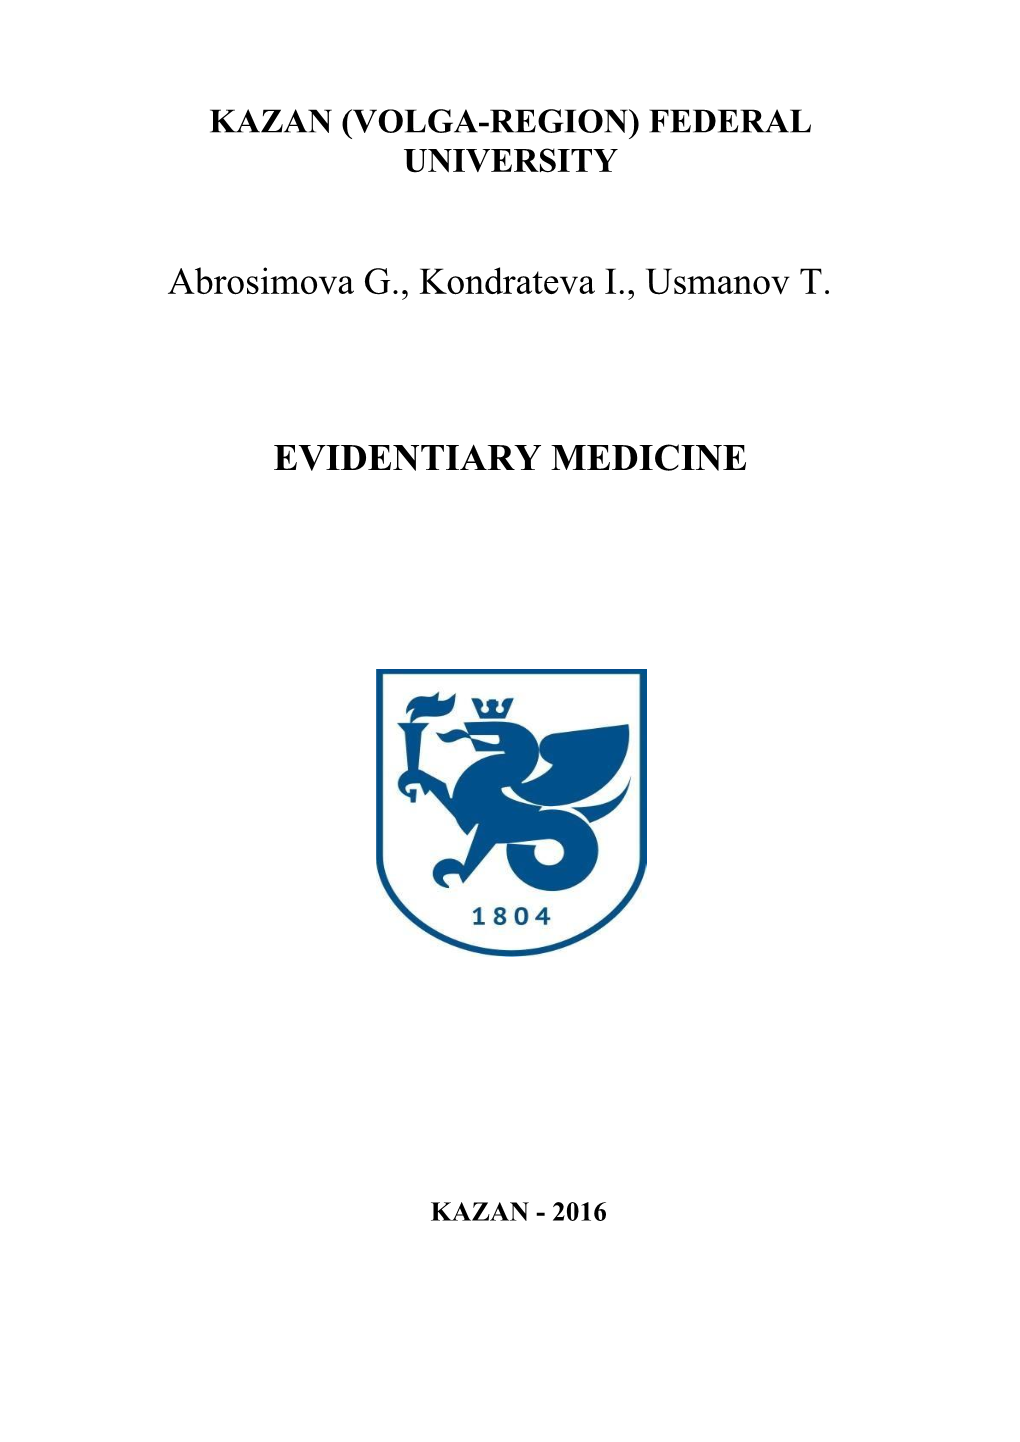 Abrosimova G., Kondrateva I., Usmanov T. EVIDENTIARY MEDICINE